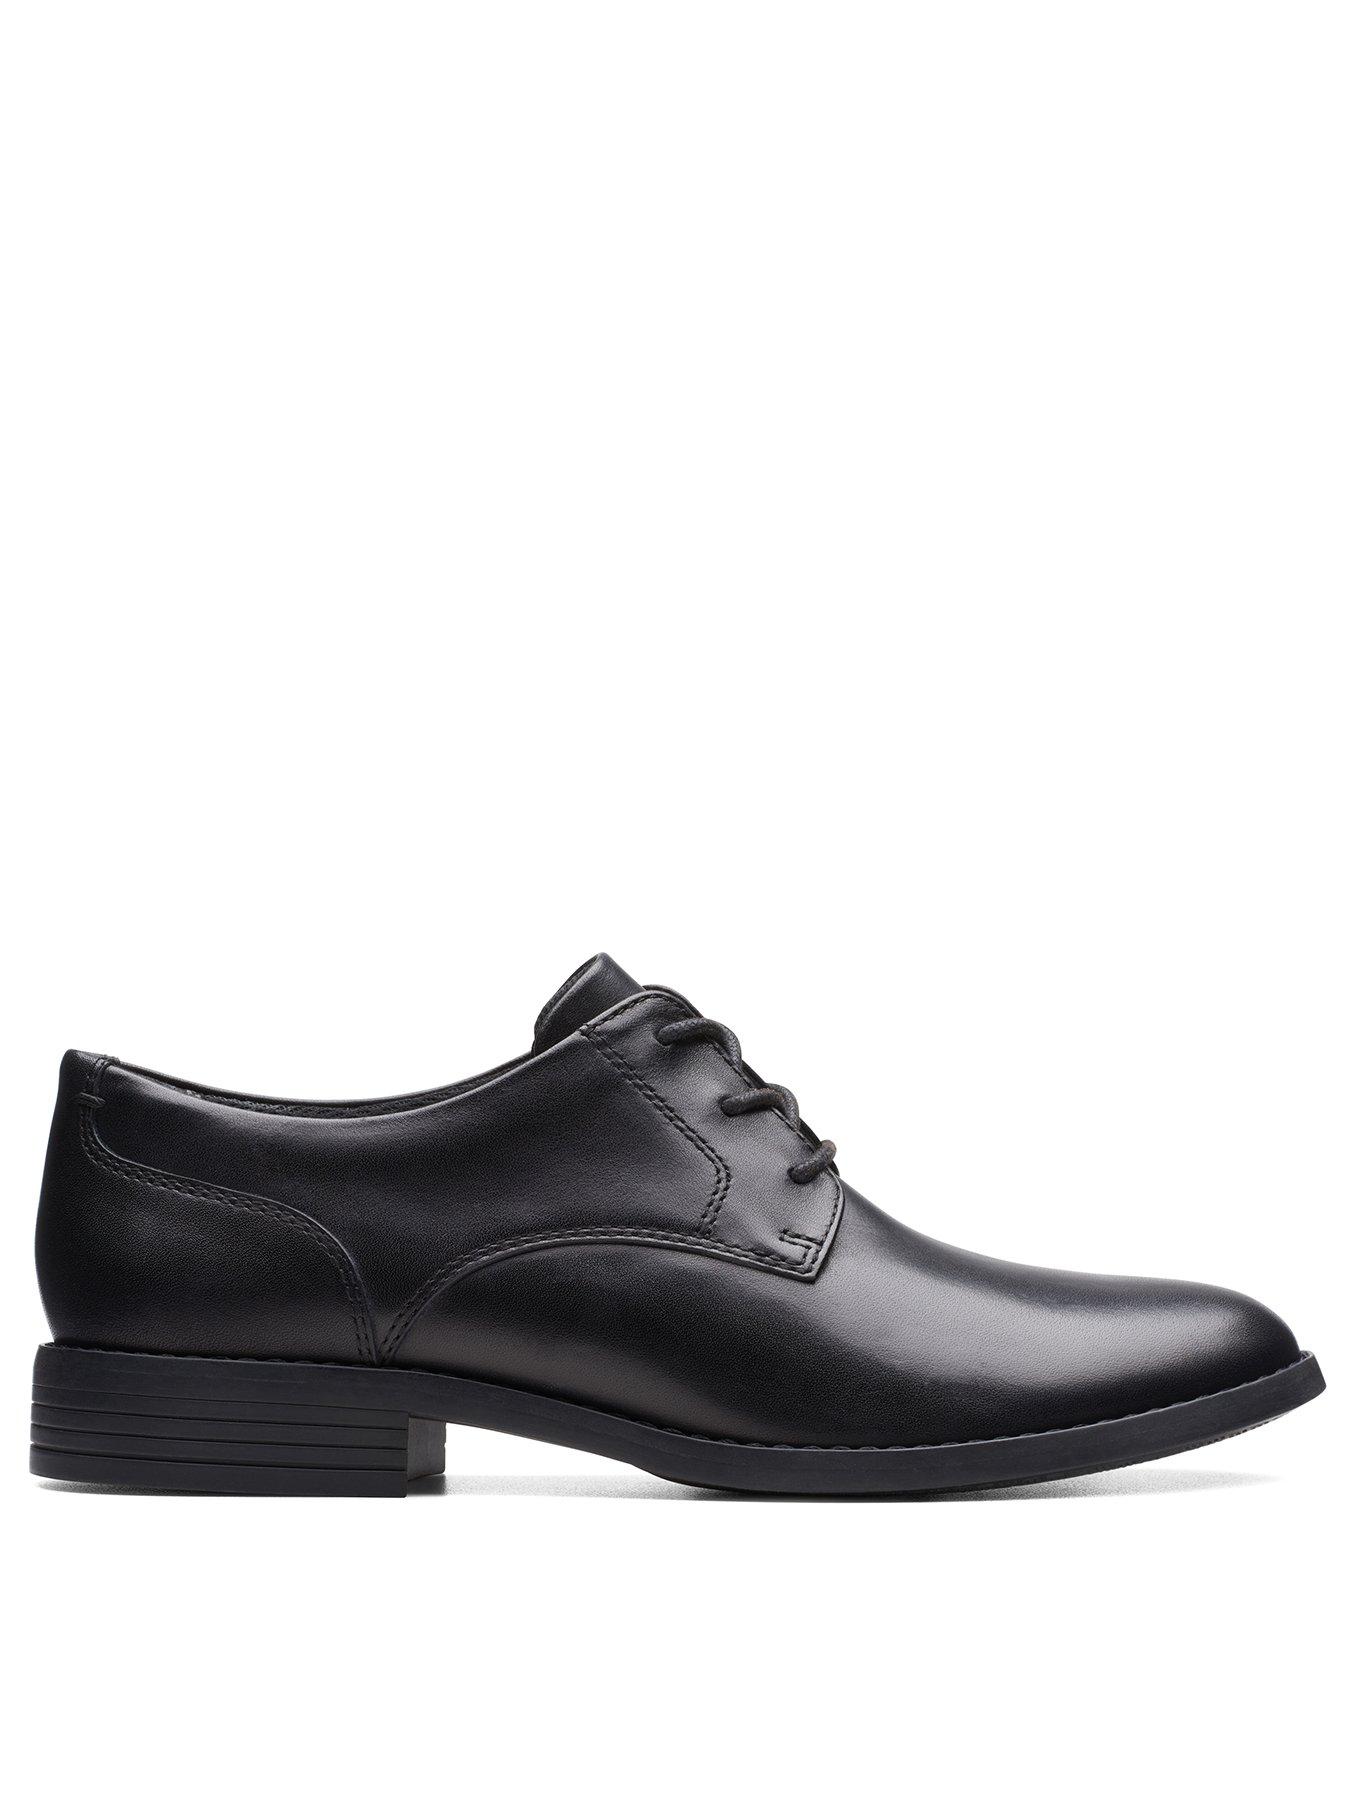 Clarks Clarks Camzin Iris Shoes - Black Leather | Very Ireland